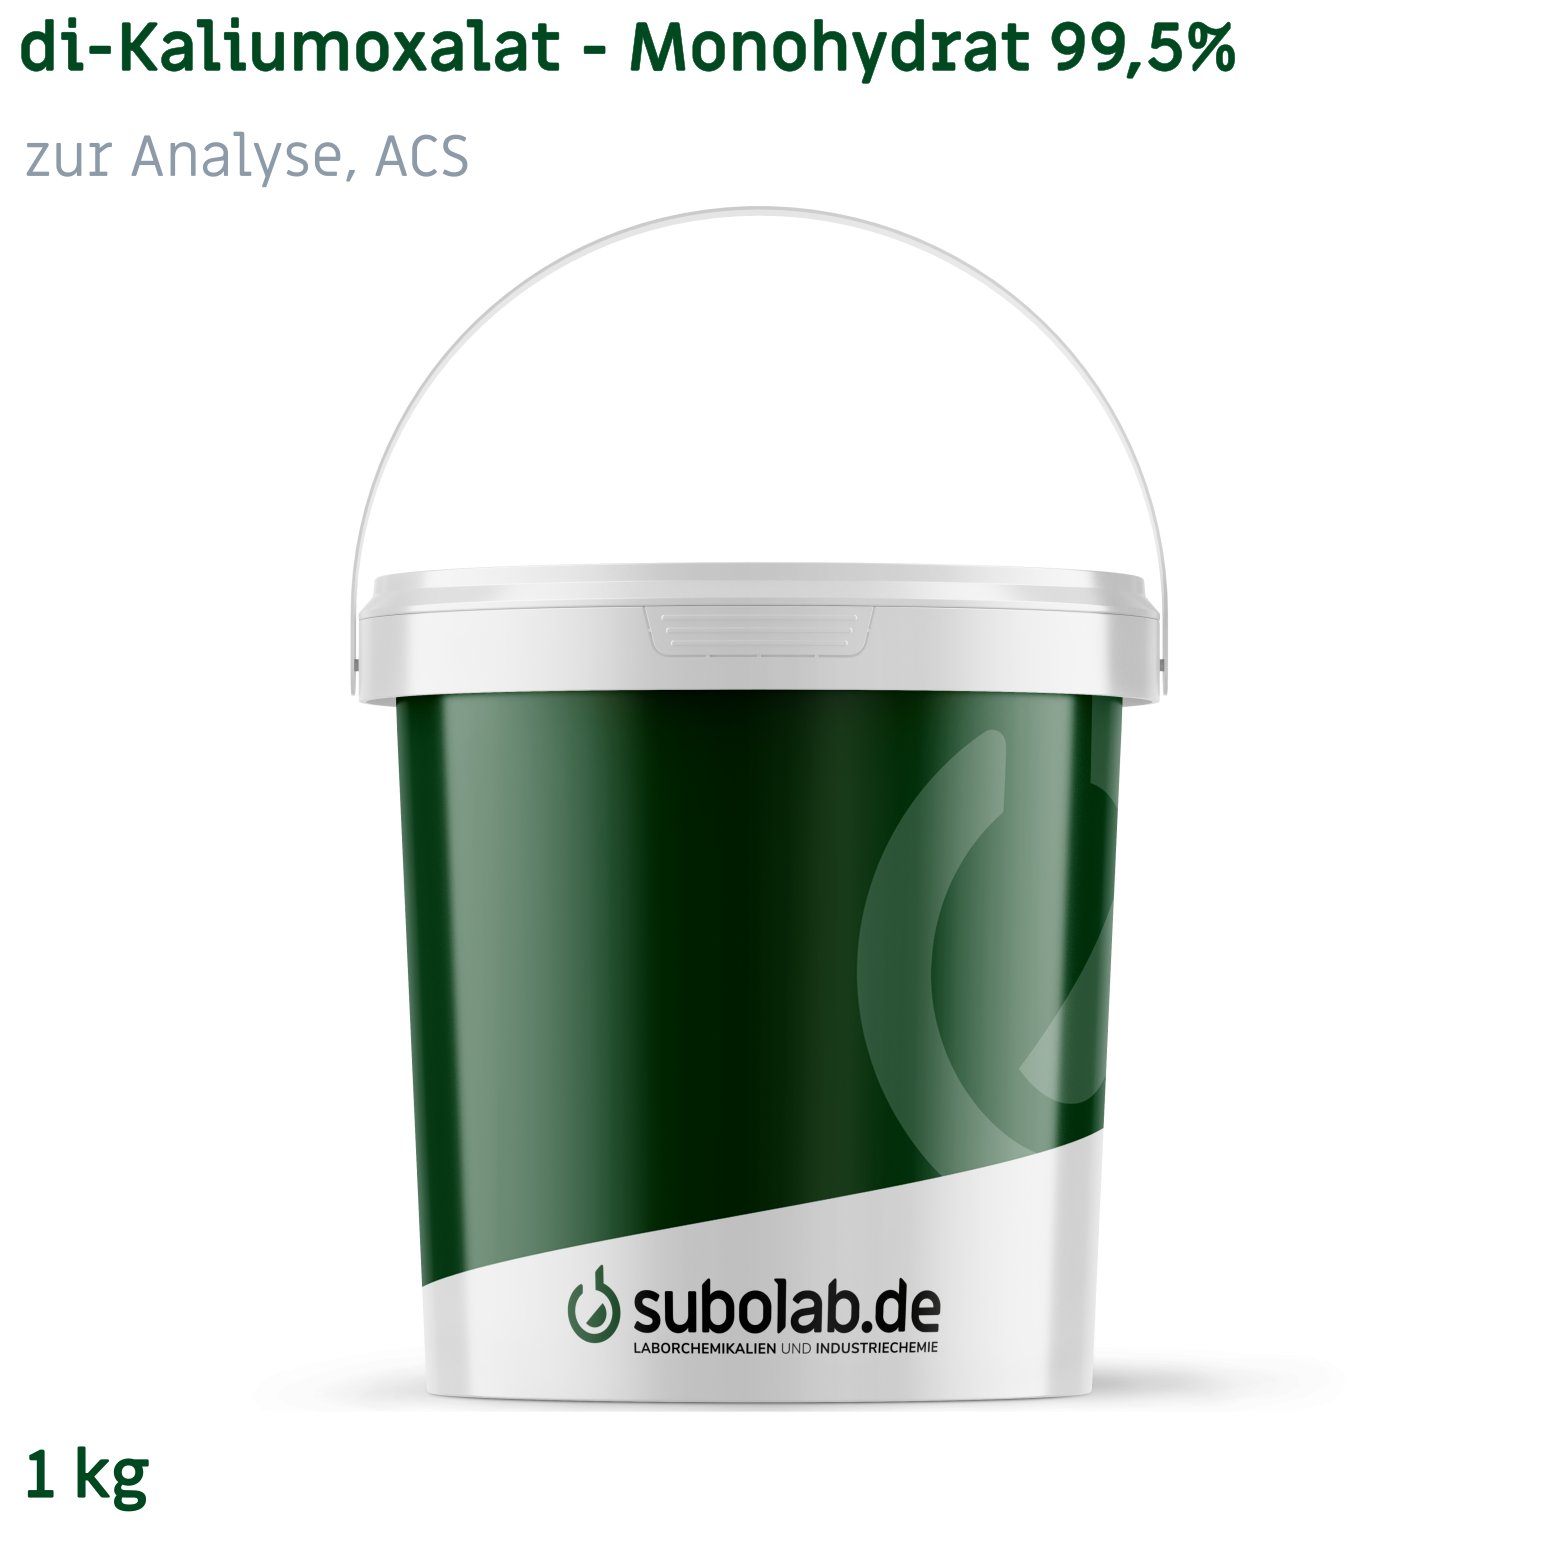 Bild von di-Kaliumoxalat - Monohydrat 99,5% zur Analyse, ACS (1 kg)